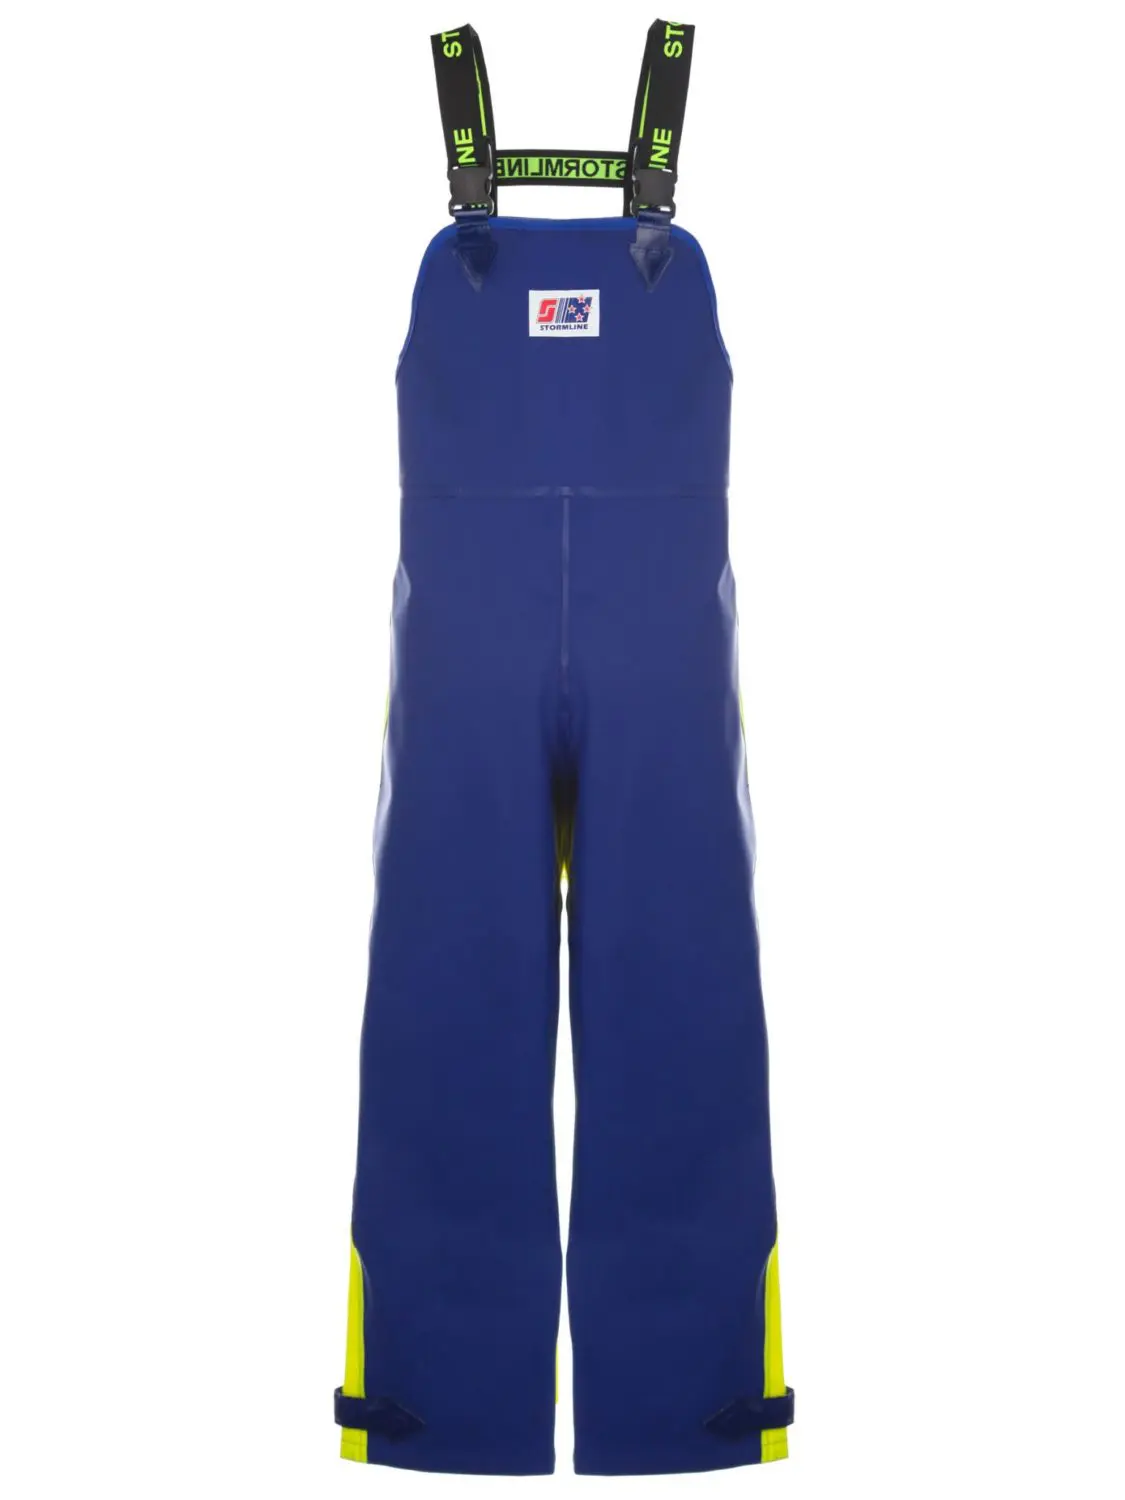 Stormline Crew 654 Heavy Duty PVC Bib and Brace Pants, Medium (M) Neon/Blue